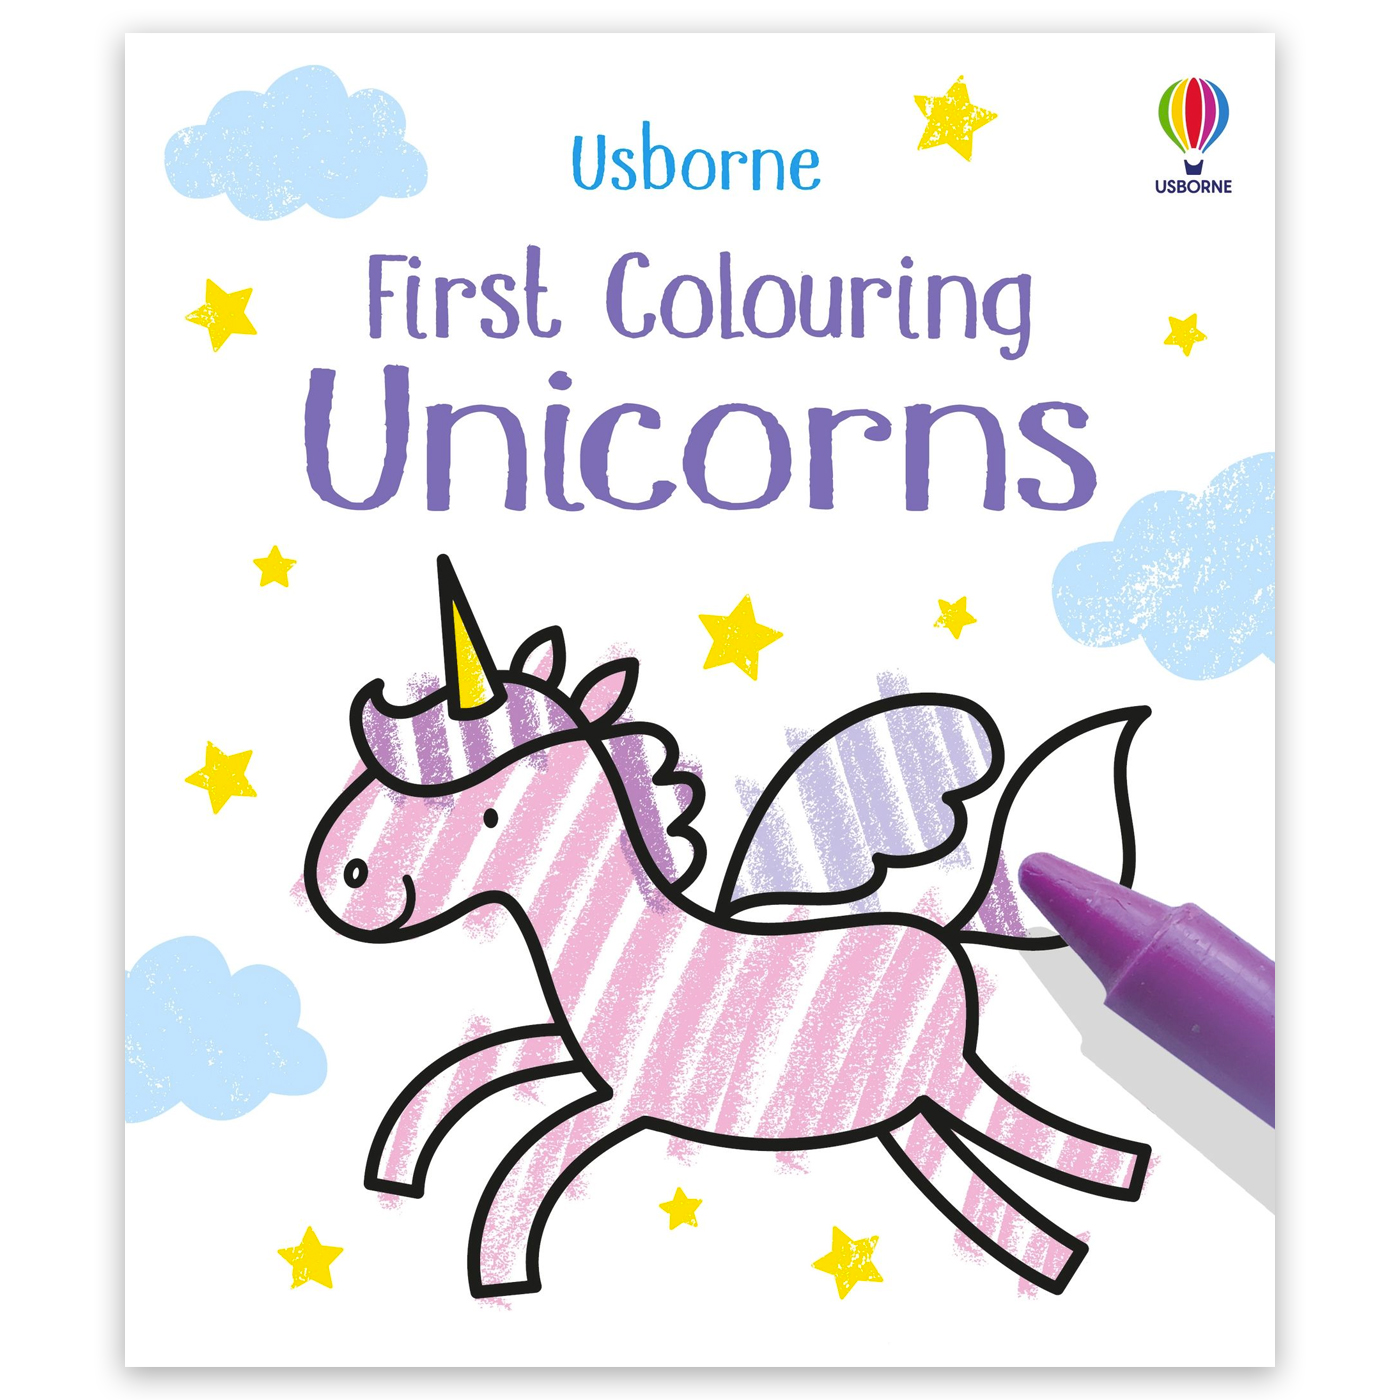  First Colouring Unicorns